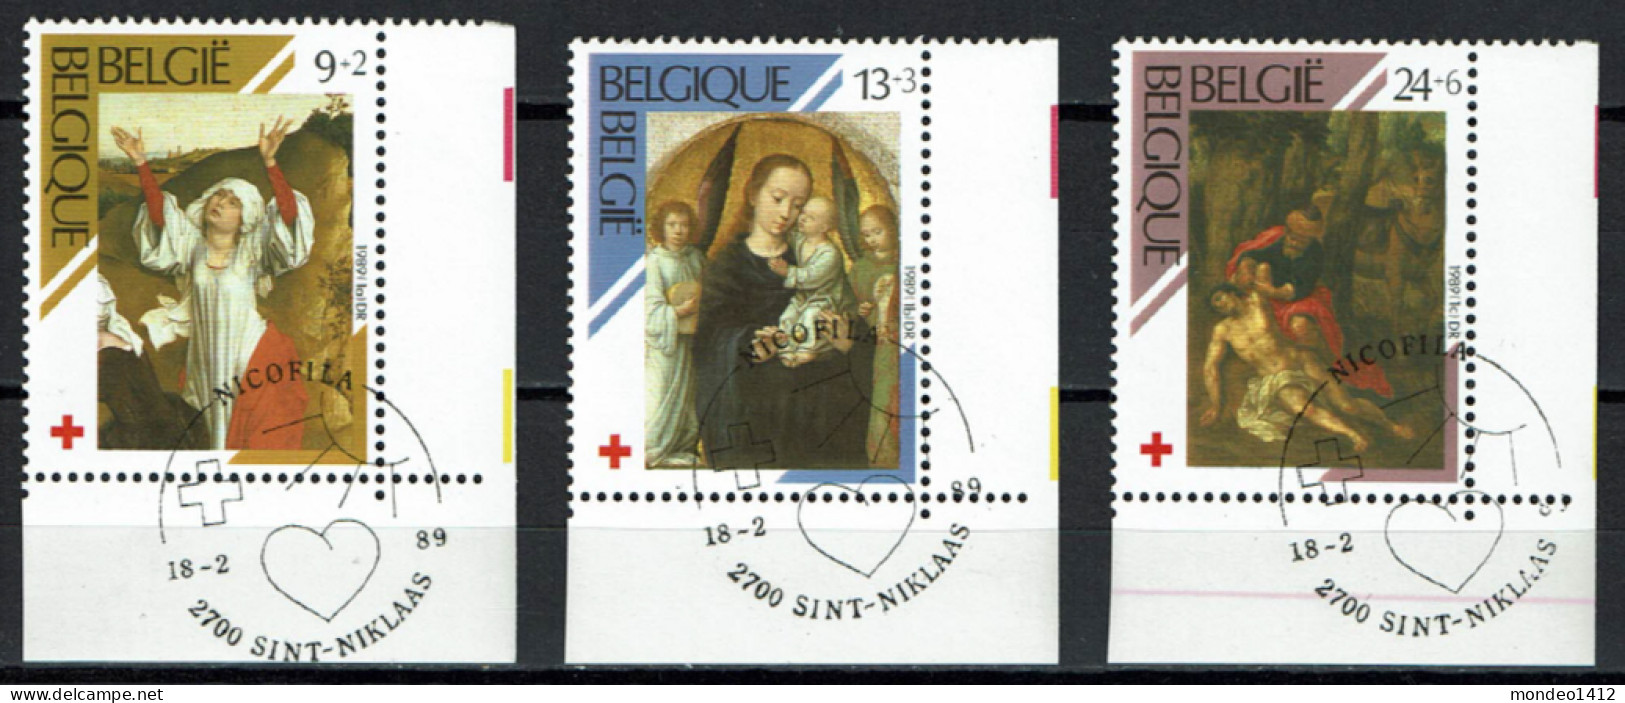 België 1989 OBP 2312/14 - Croix Rouge, Red Cross - Schilderij, Painting, Tableau - Bonne Valeur - Usati